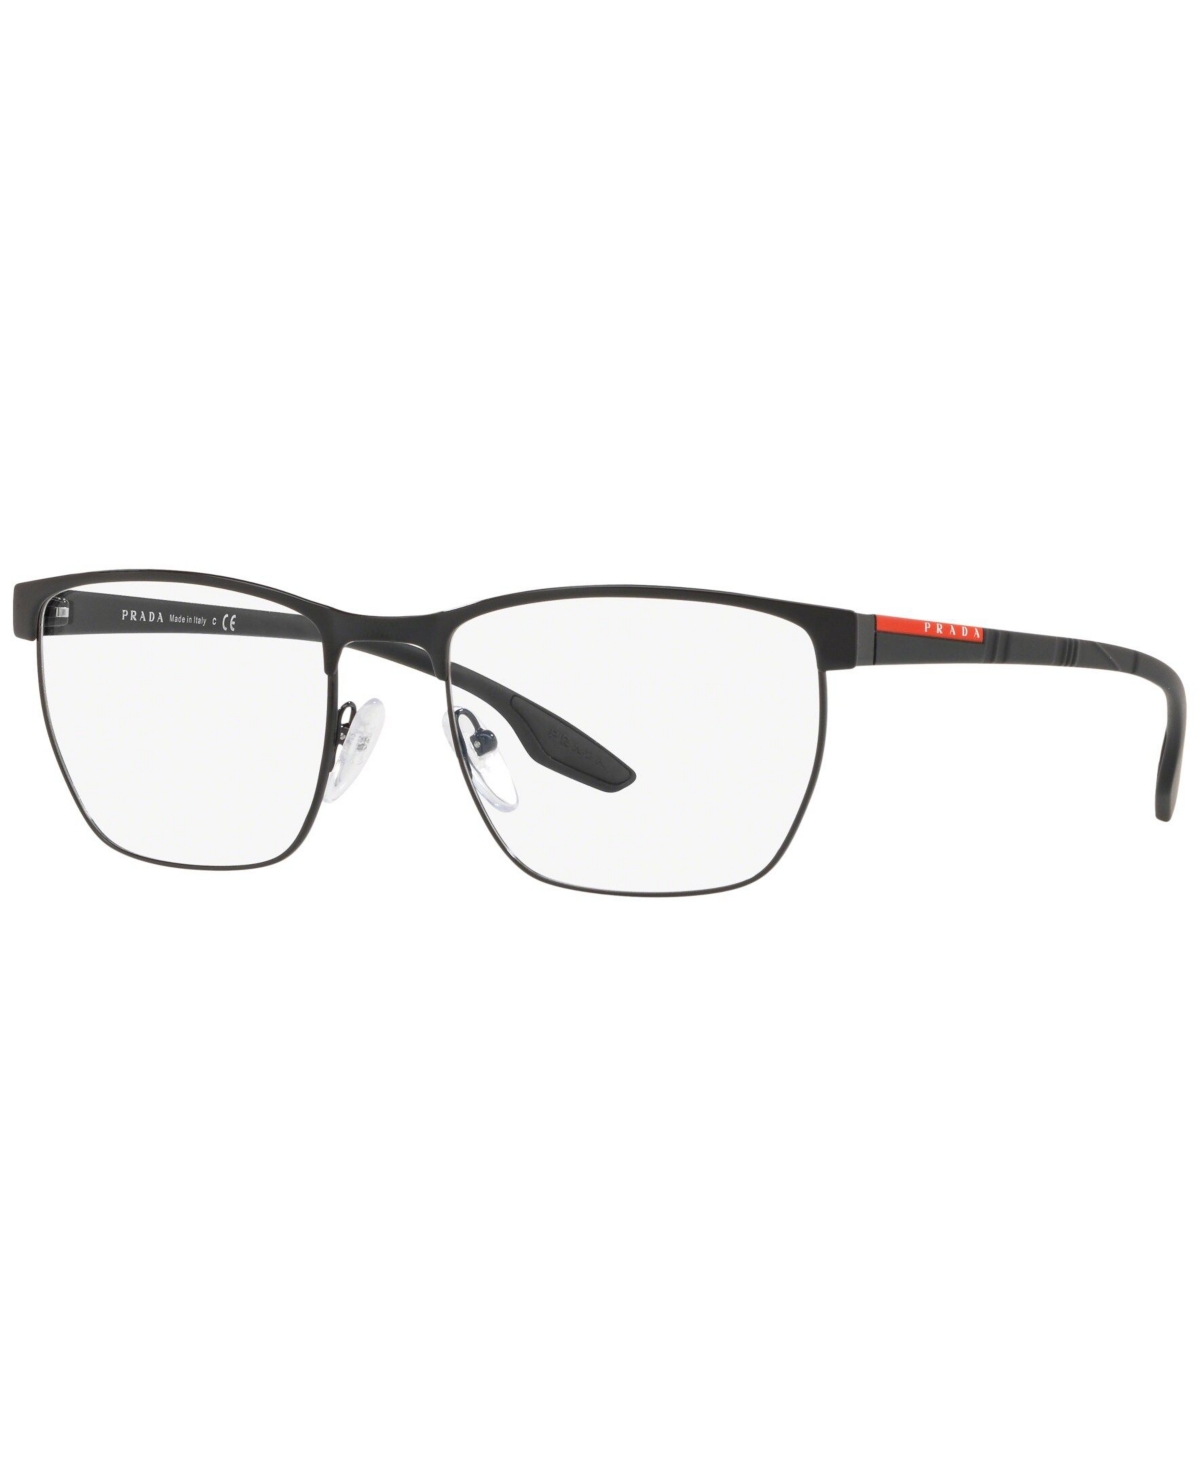 Ps 50LV Men's Irregular Eyeglasses - Black